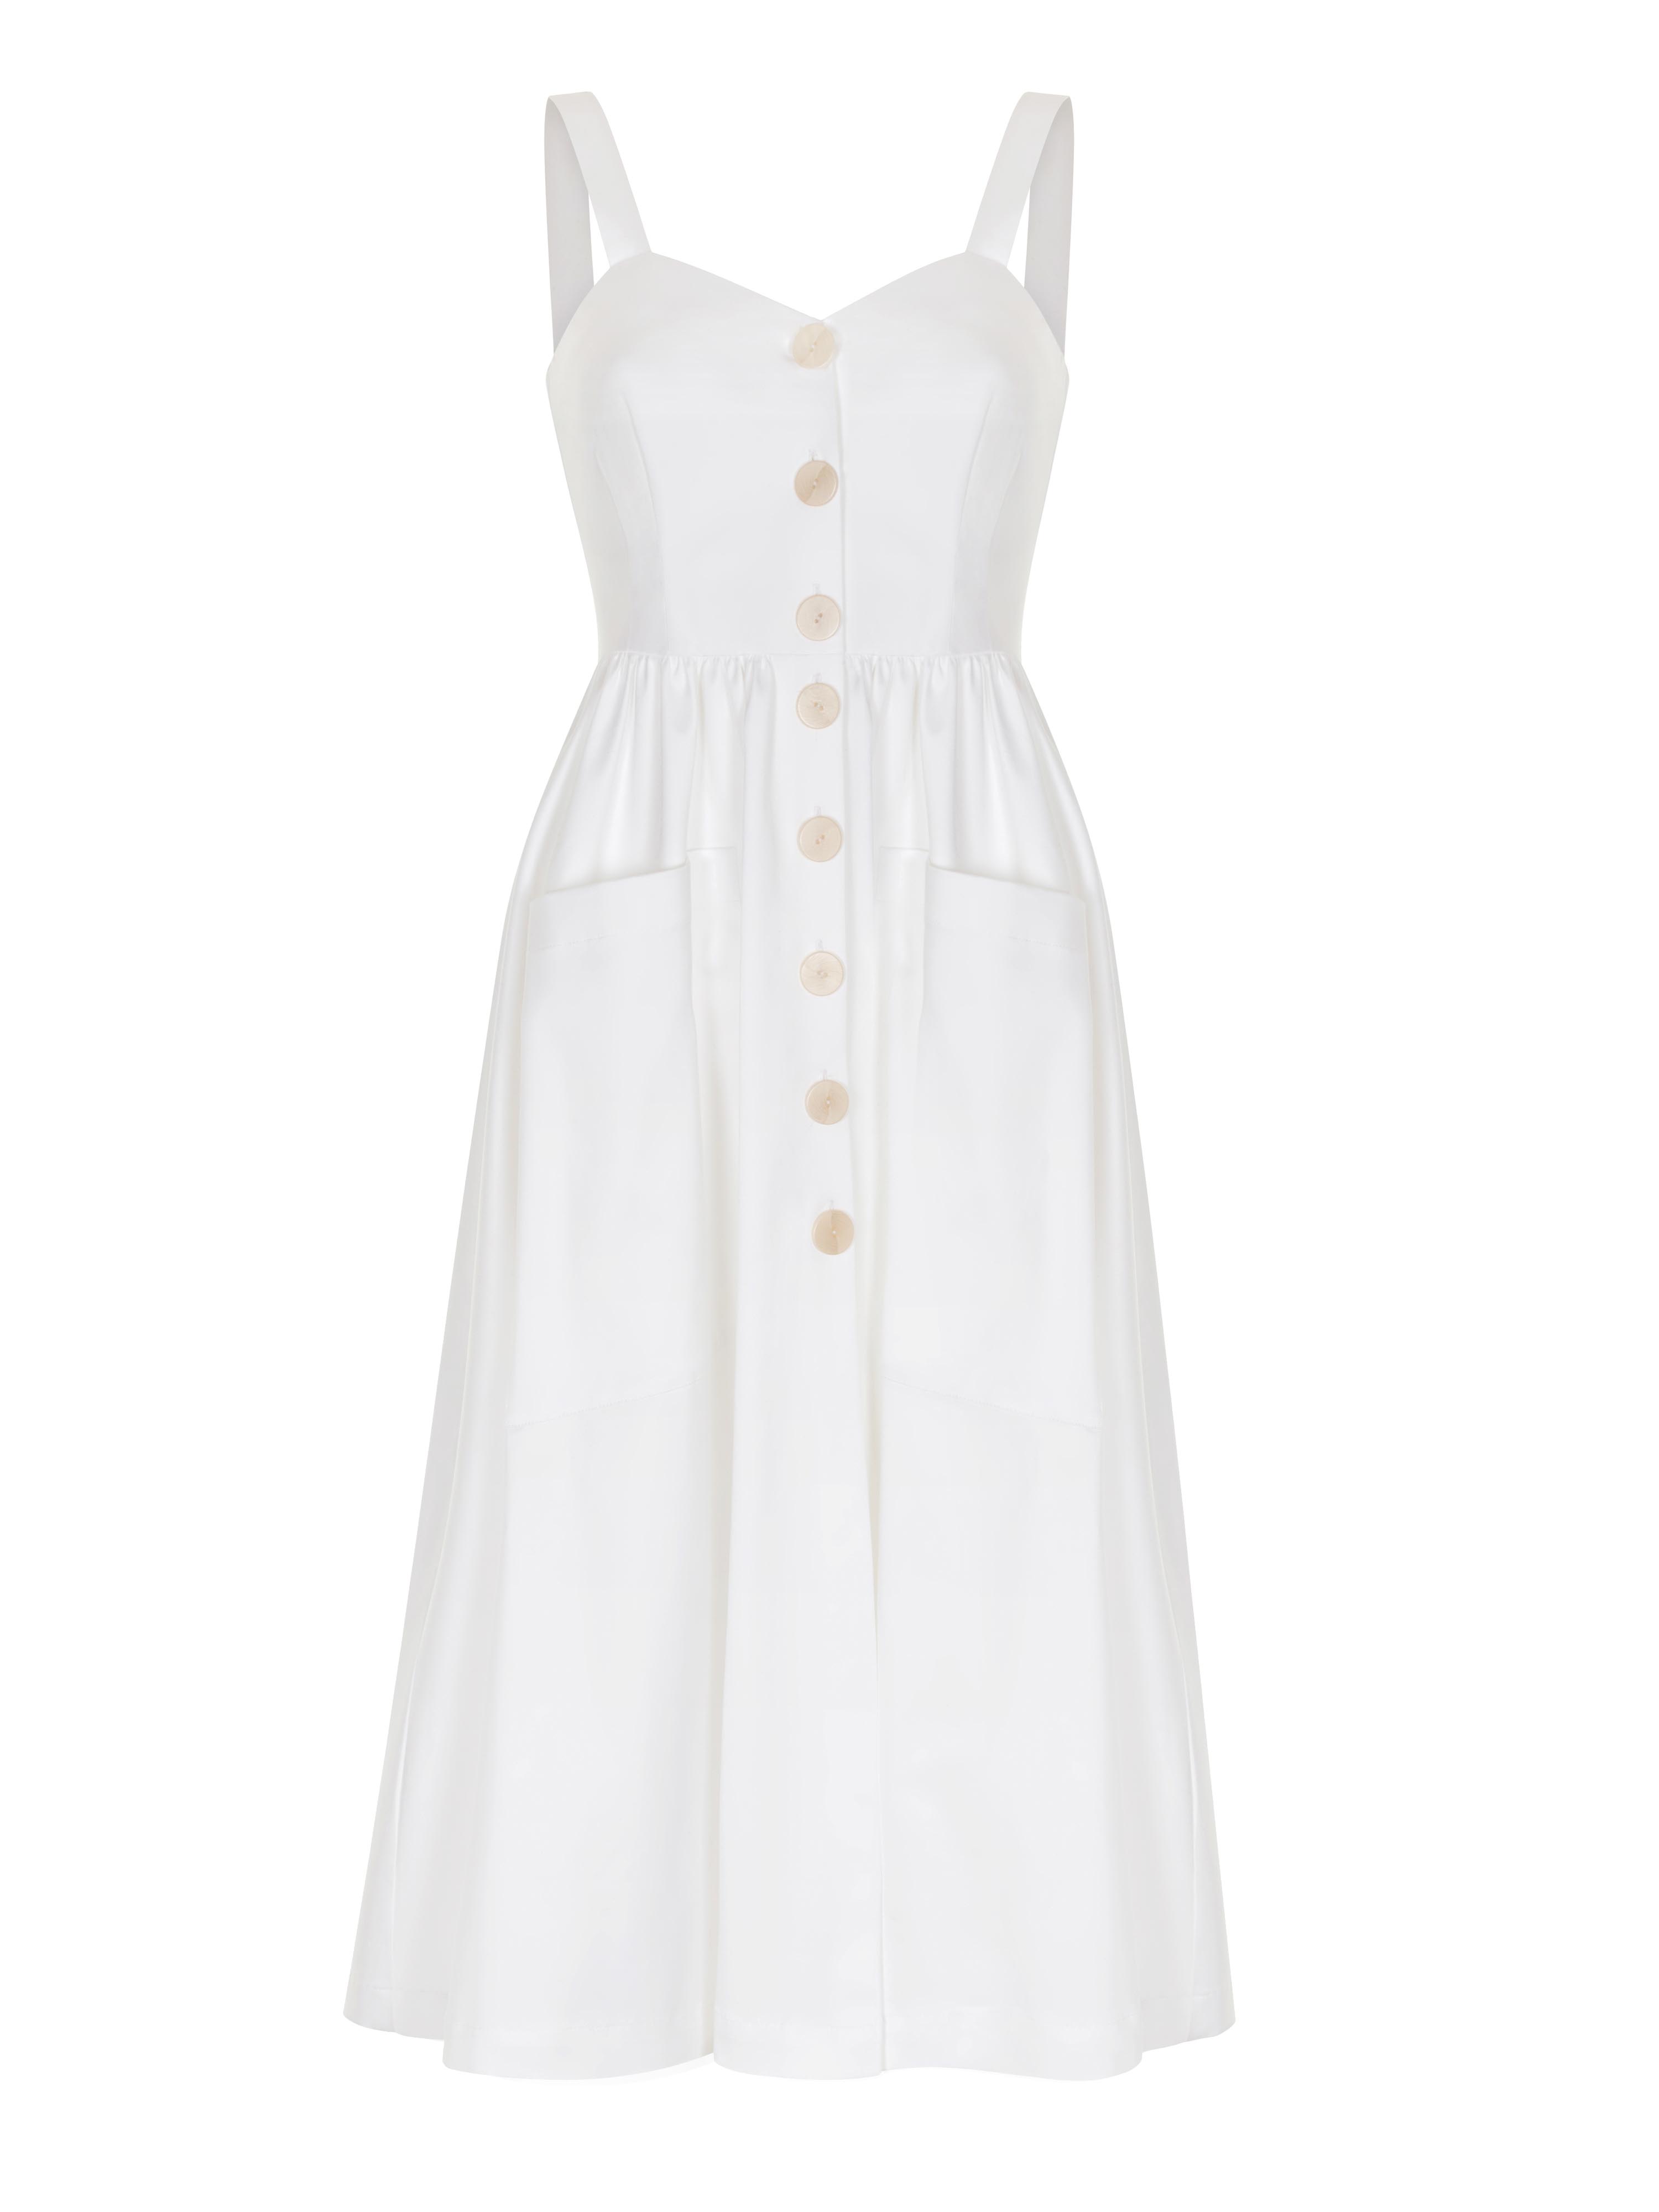 DARIA WHITE DRESS